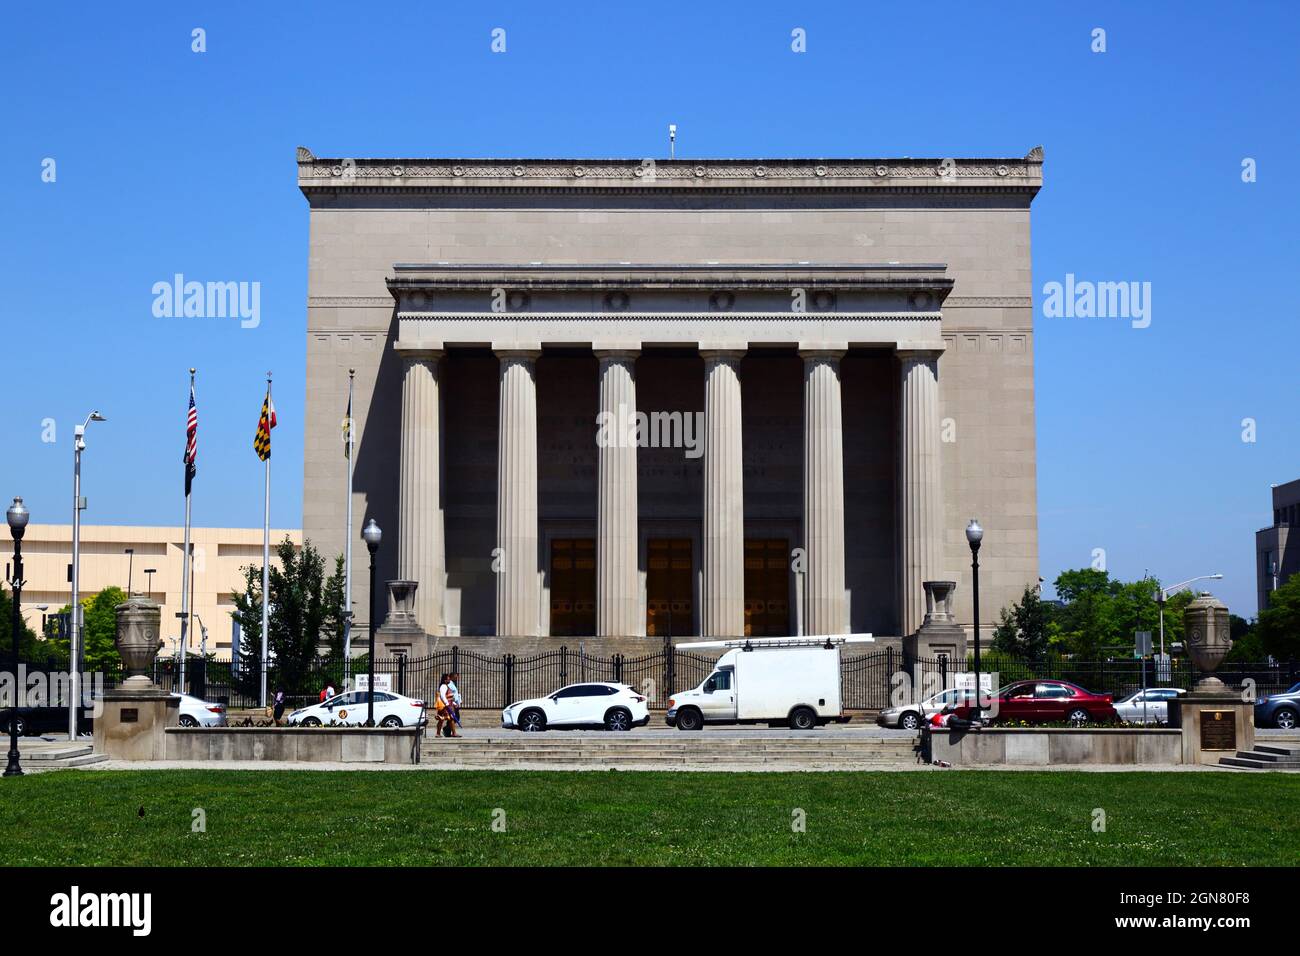 Baltimore War Memorial (101 North gay Street) et War Memorial Plaza, Baltimore, Maryland, États-Unis Banque D'Images